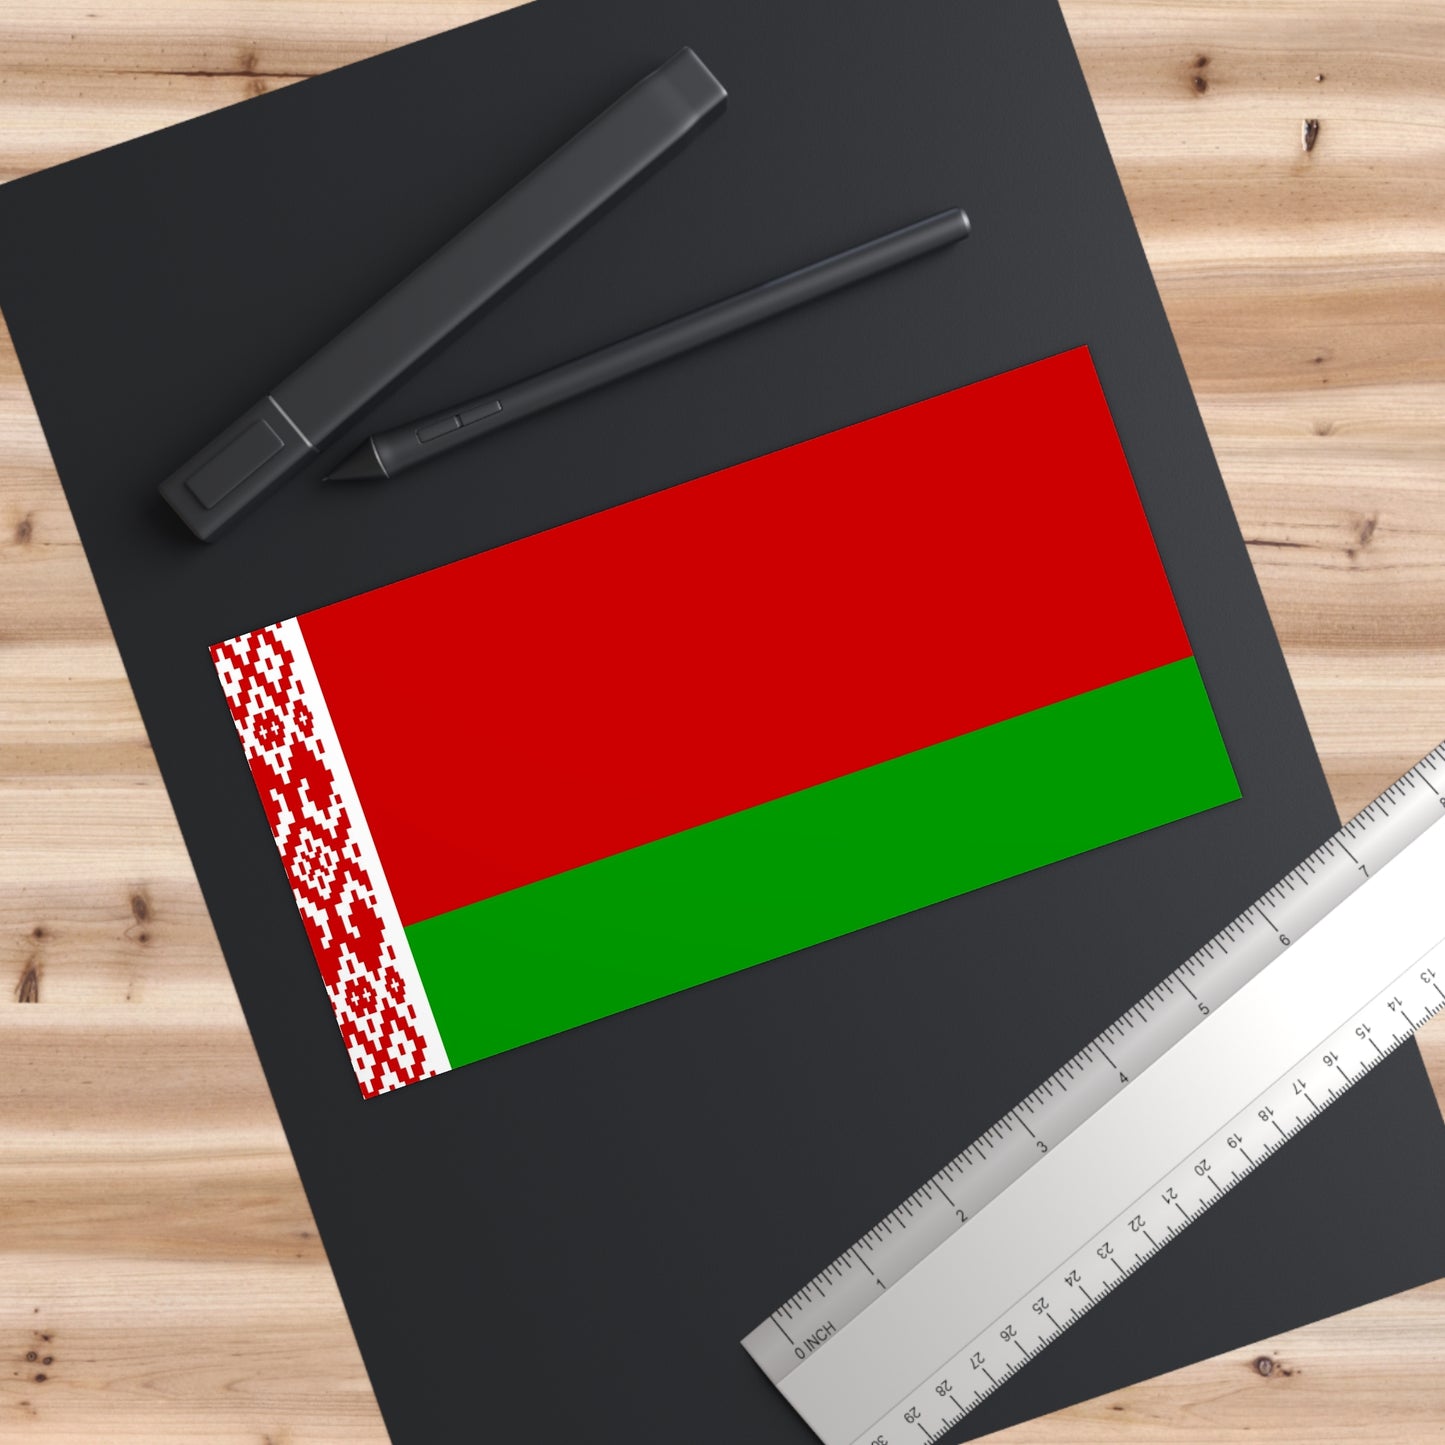 Belarus Flag Bumper Sticker